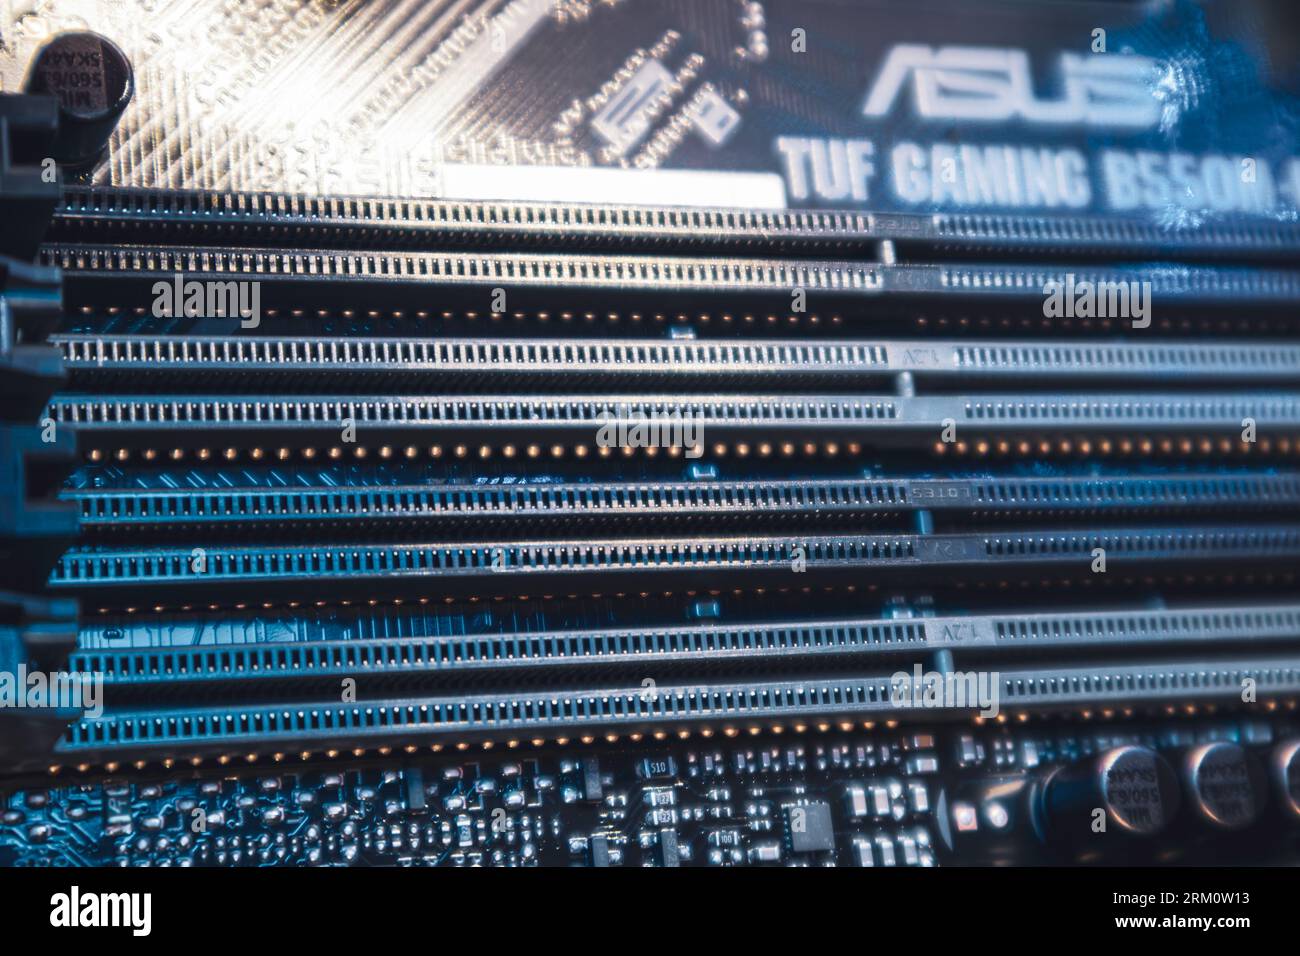 Kyiv, Ukraine - January 05, 2022: Asus Tuf Gaming motherboard, DDR RAM memory slots sockets close-up, desktop PC. Computer hardware chipset components Stock Photo